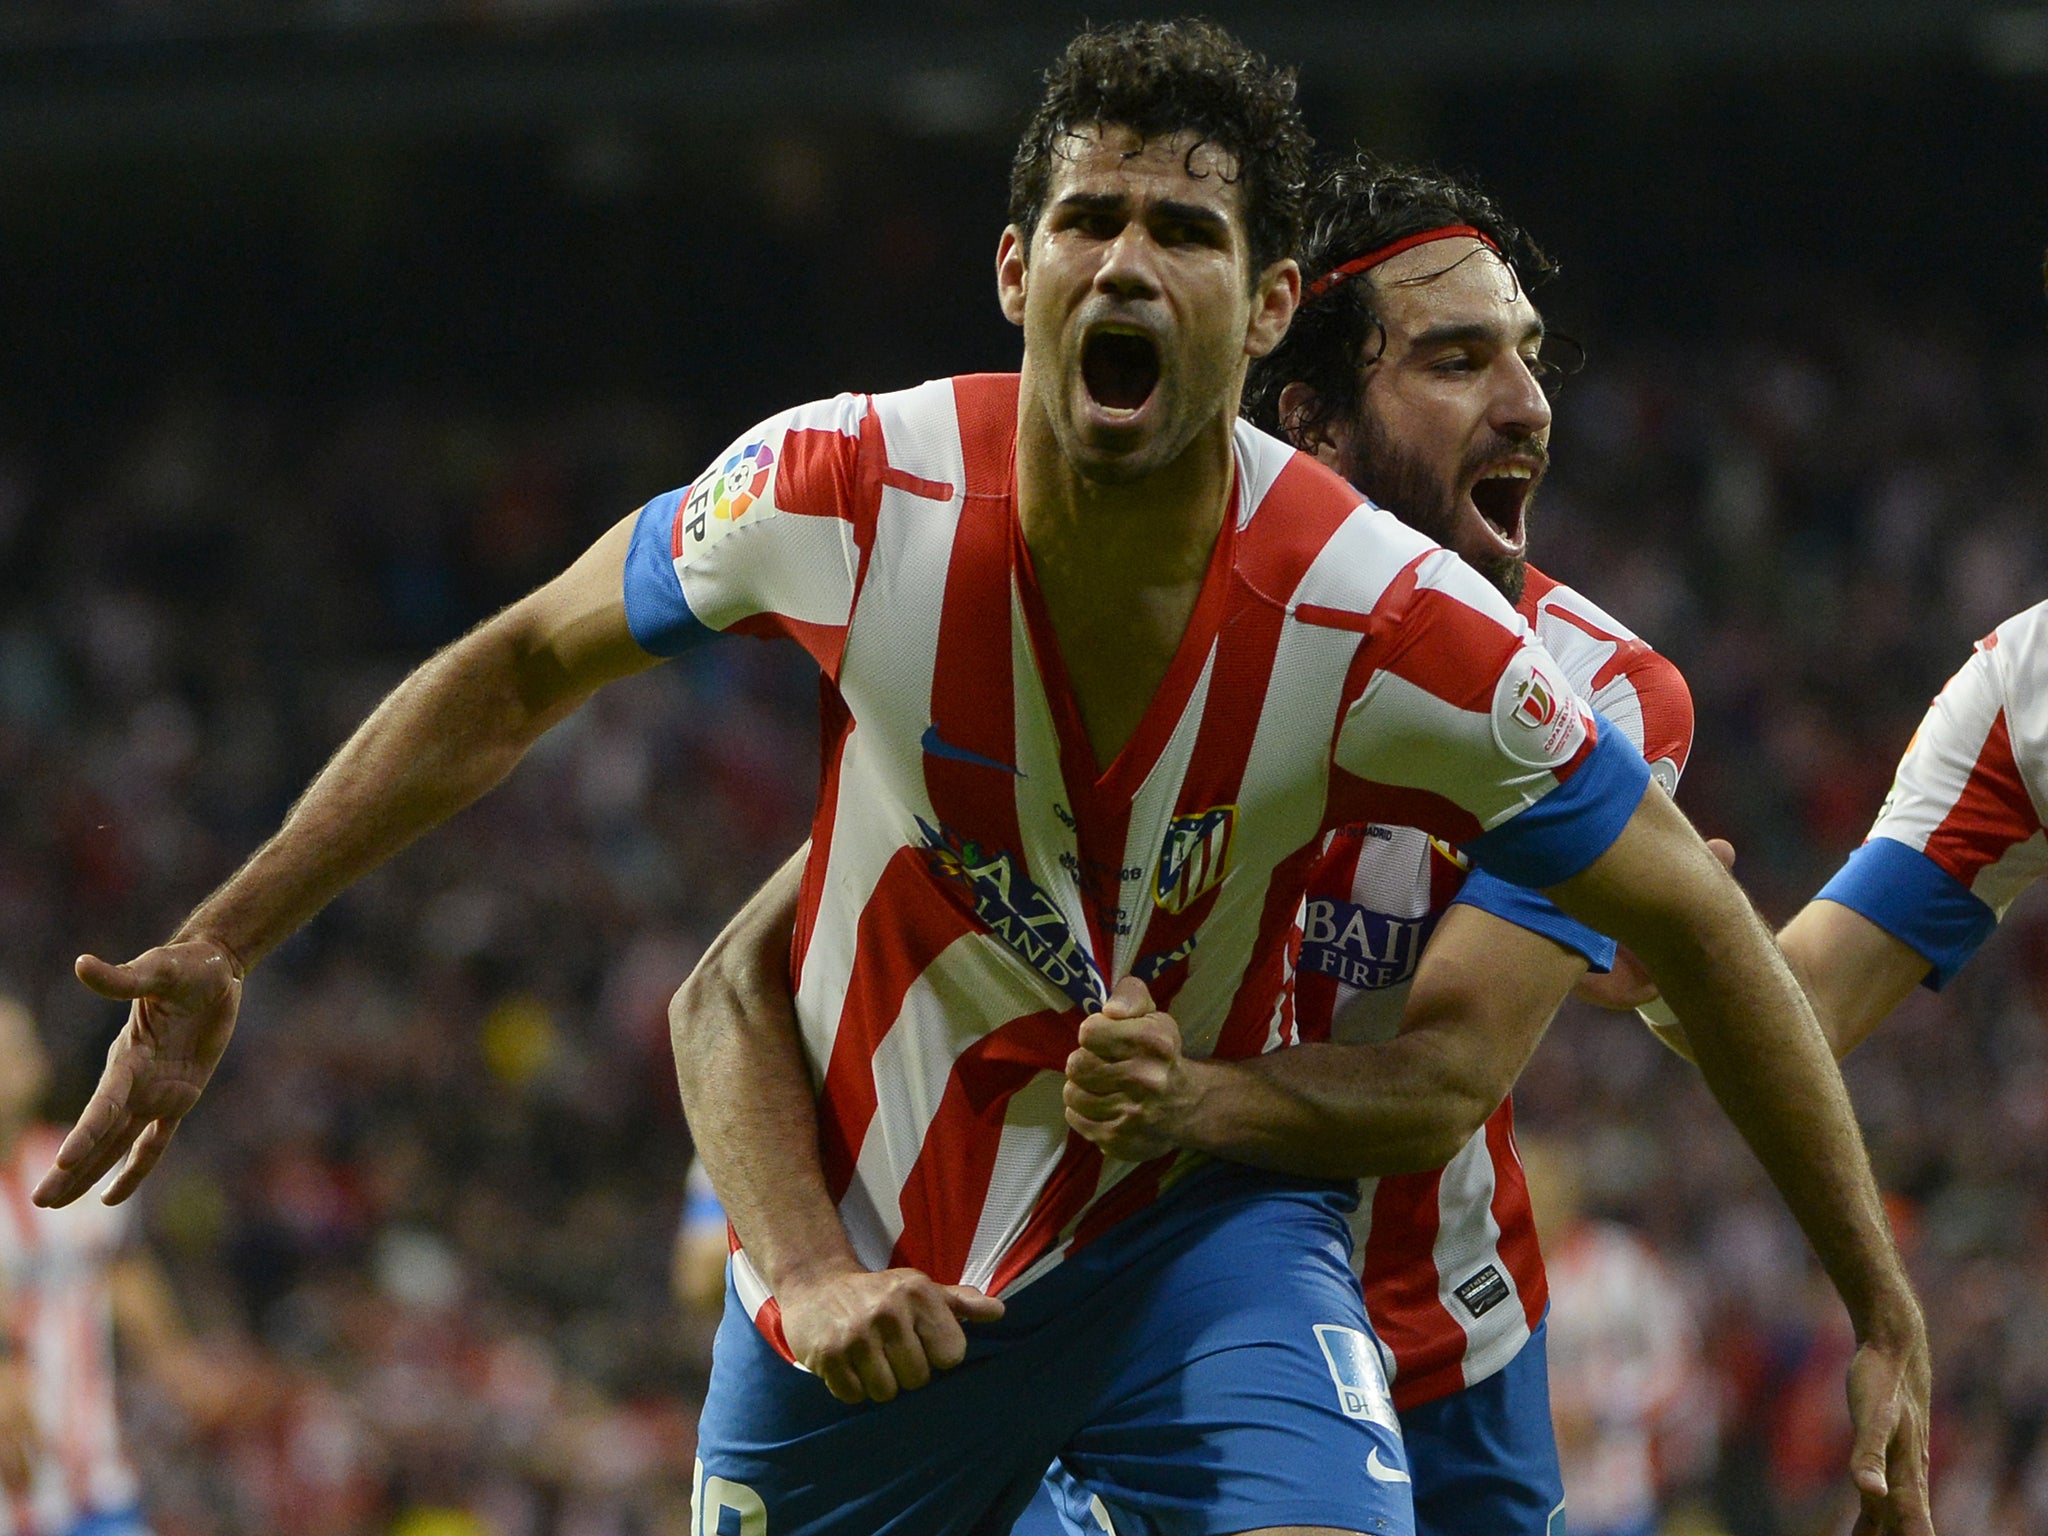 Transfer news: Atletico Madrid refuse to sell Diego Costa despite